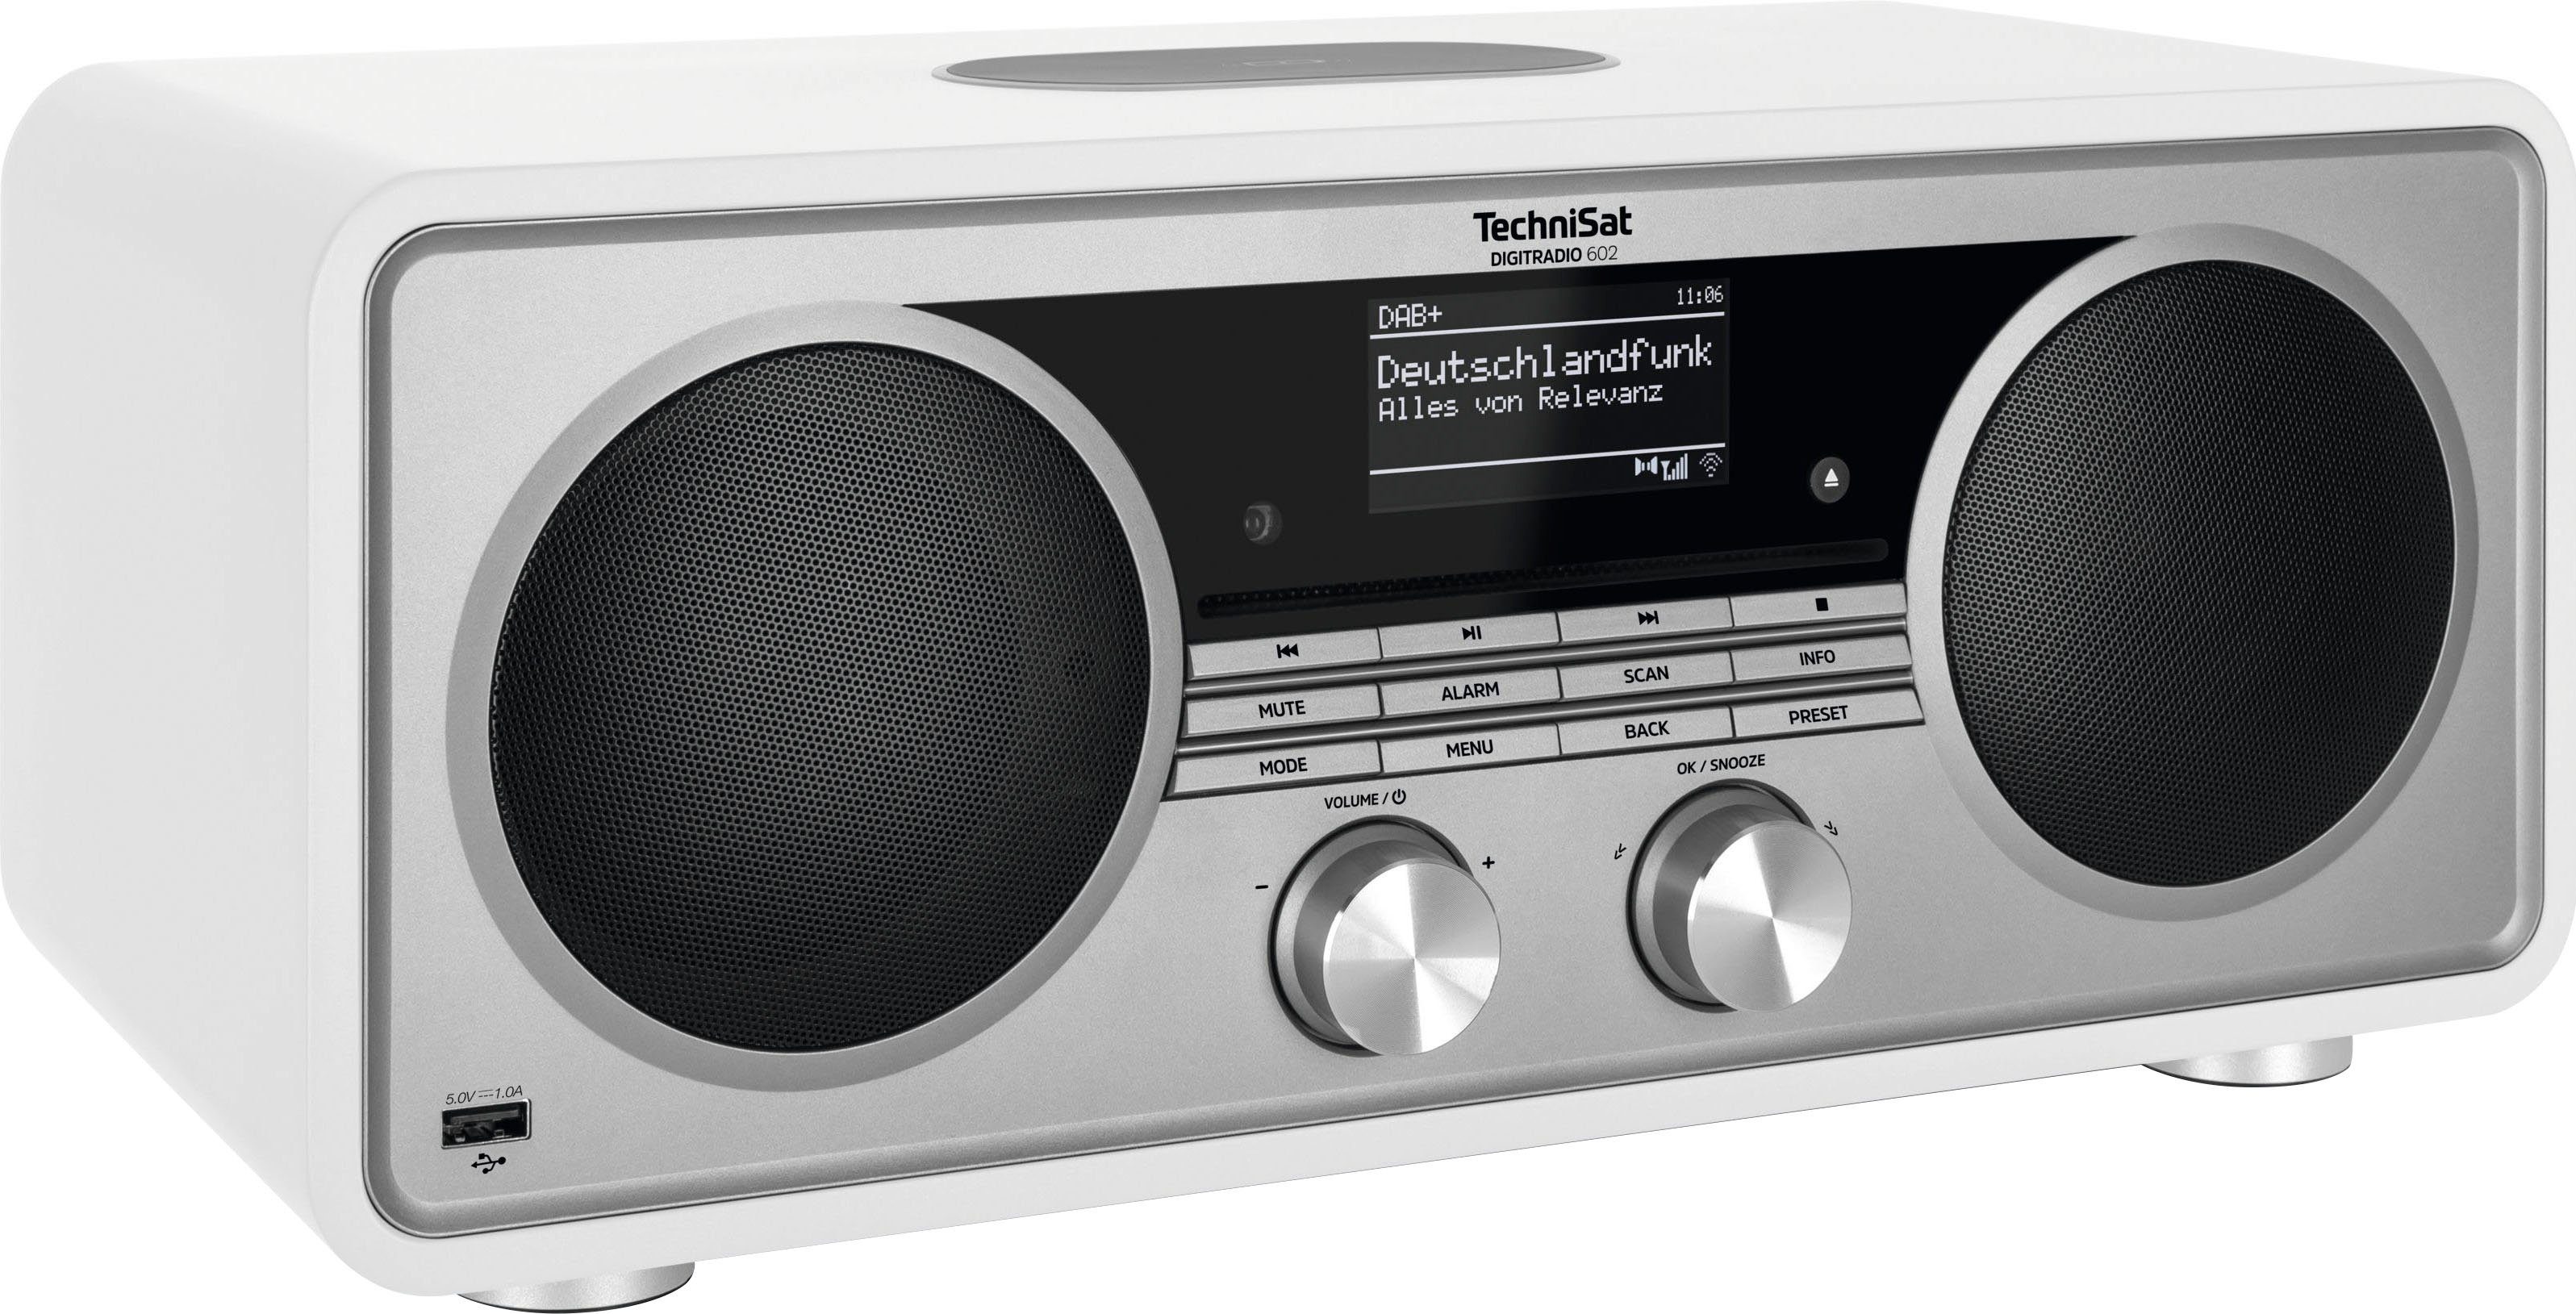 TechniSat DIGITRADIO 602 Internet-Radio (Digitalradio (DAB), UKW mit RDS, 70 W, Stereoanlage, CD-Player) Weiß/Silber | Internetradios